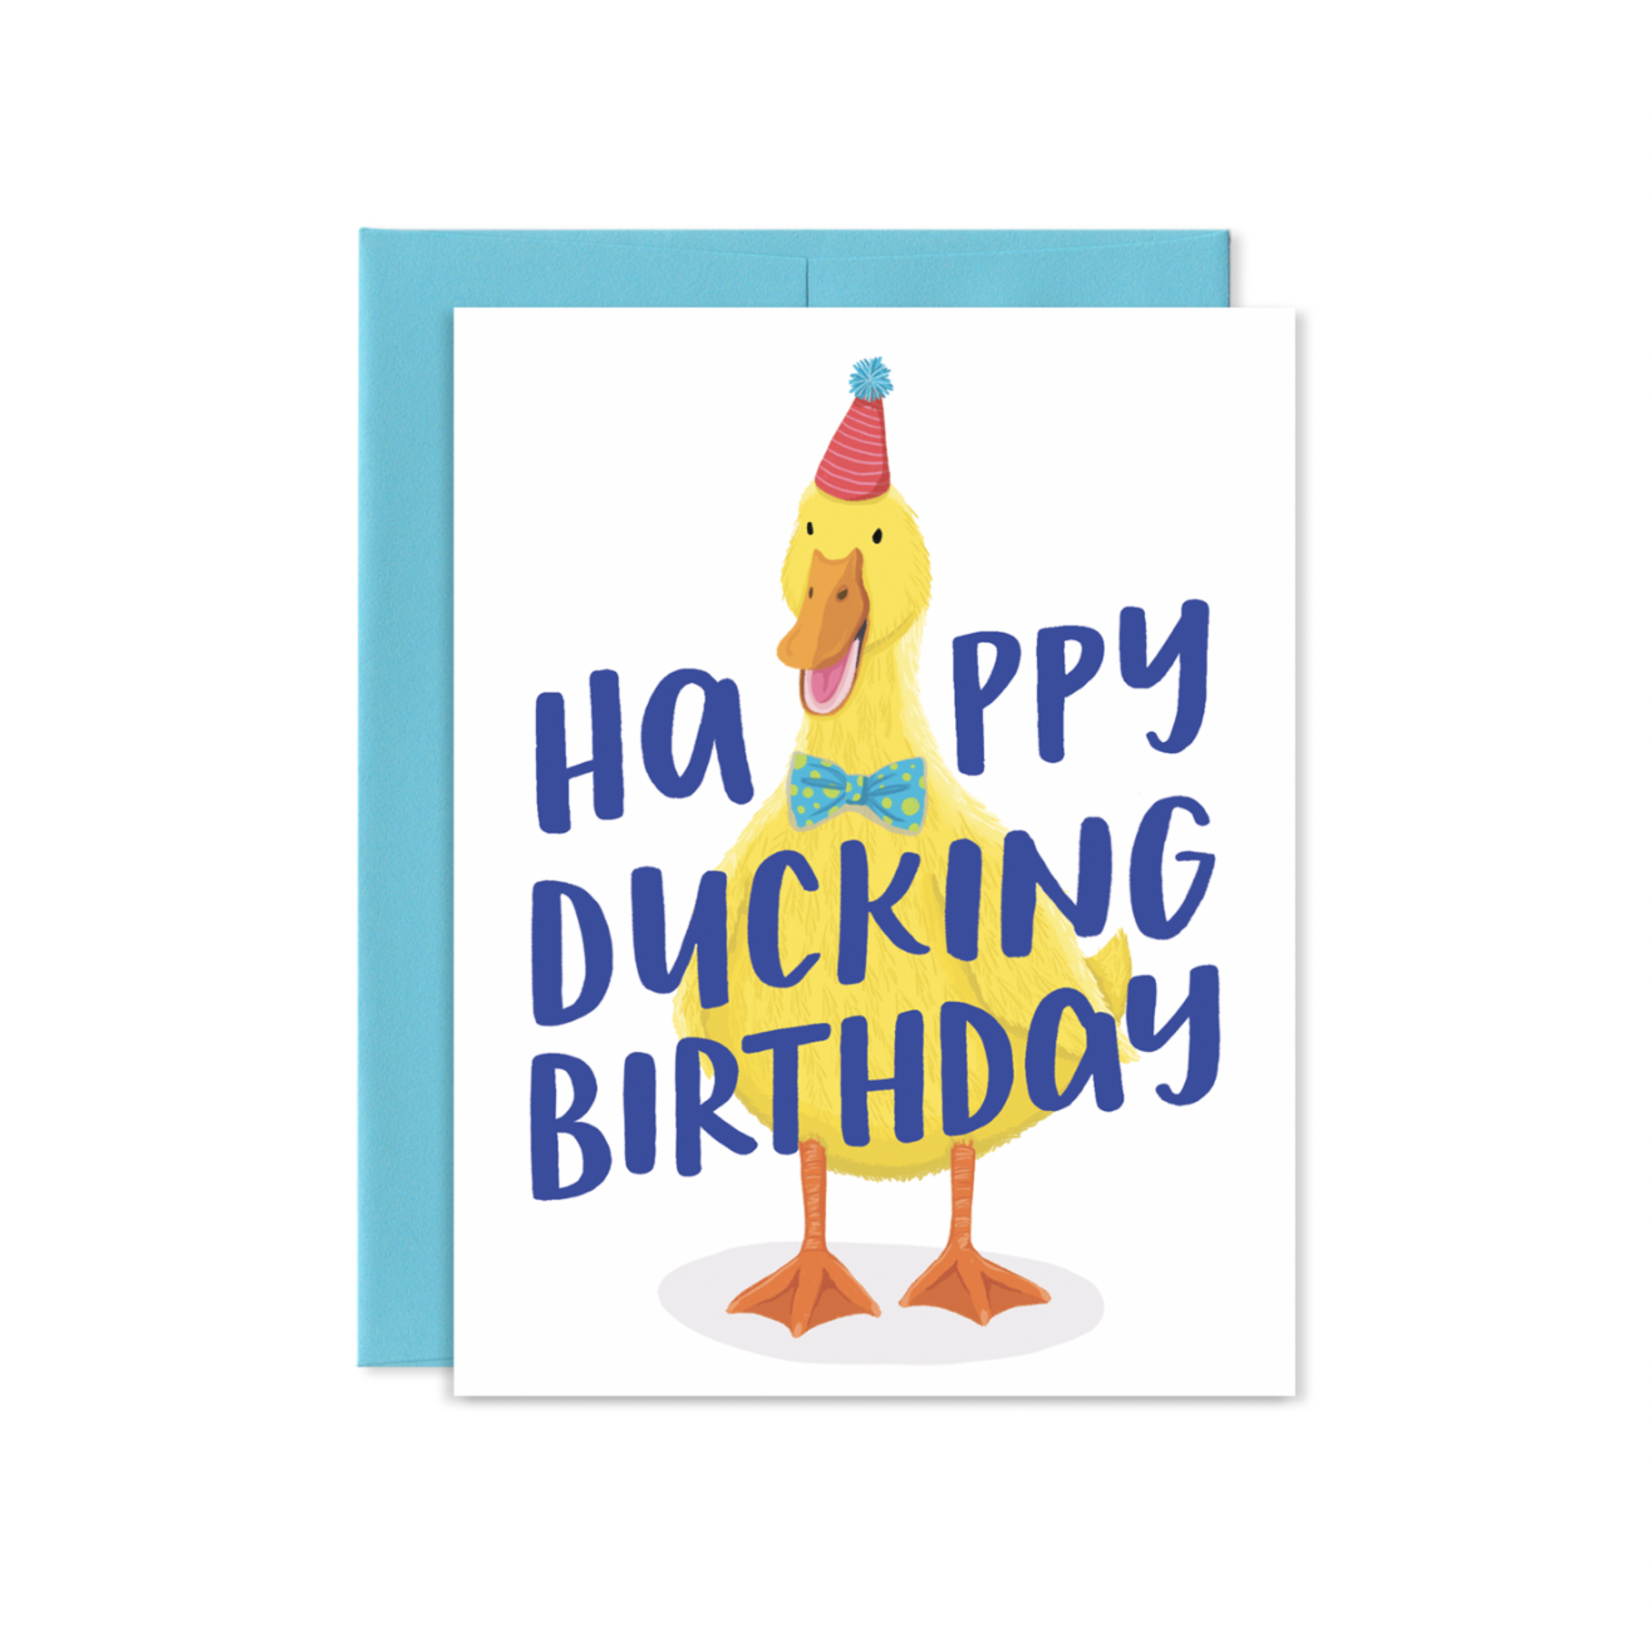 Grey Street Paper Ducking Birthday Card